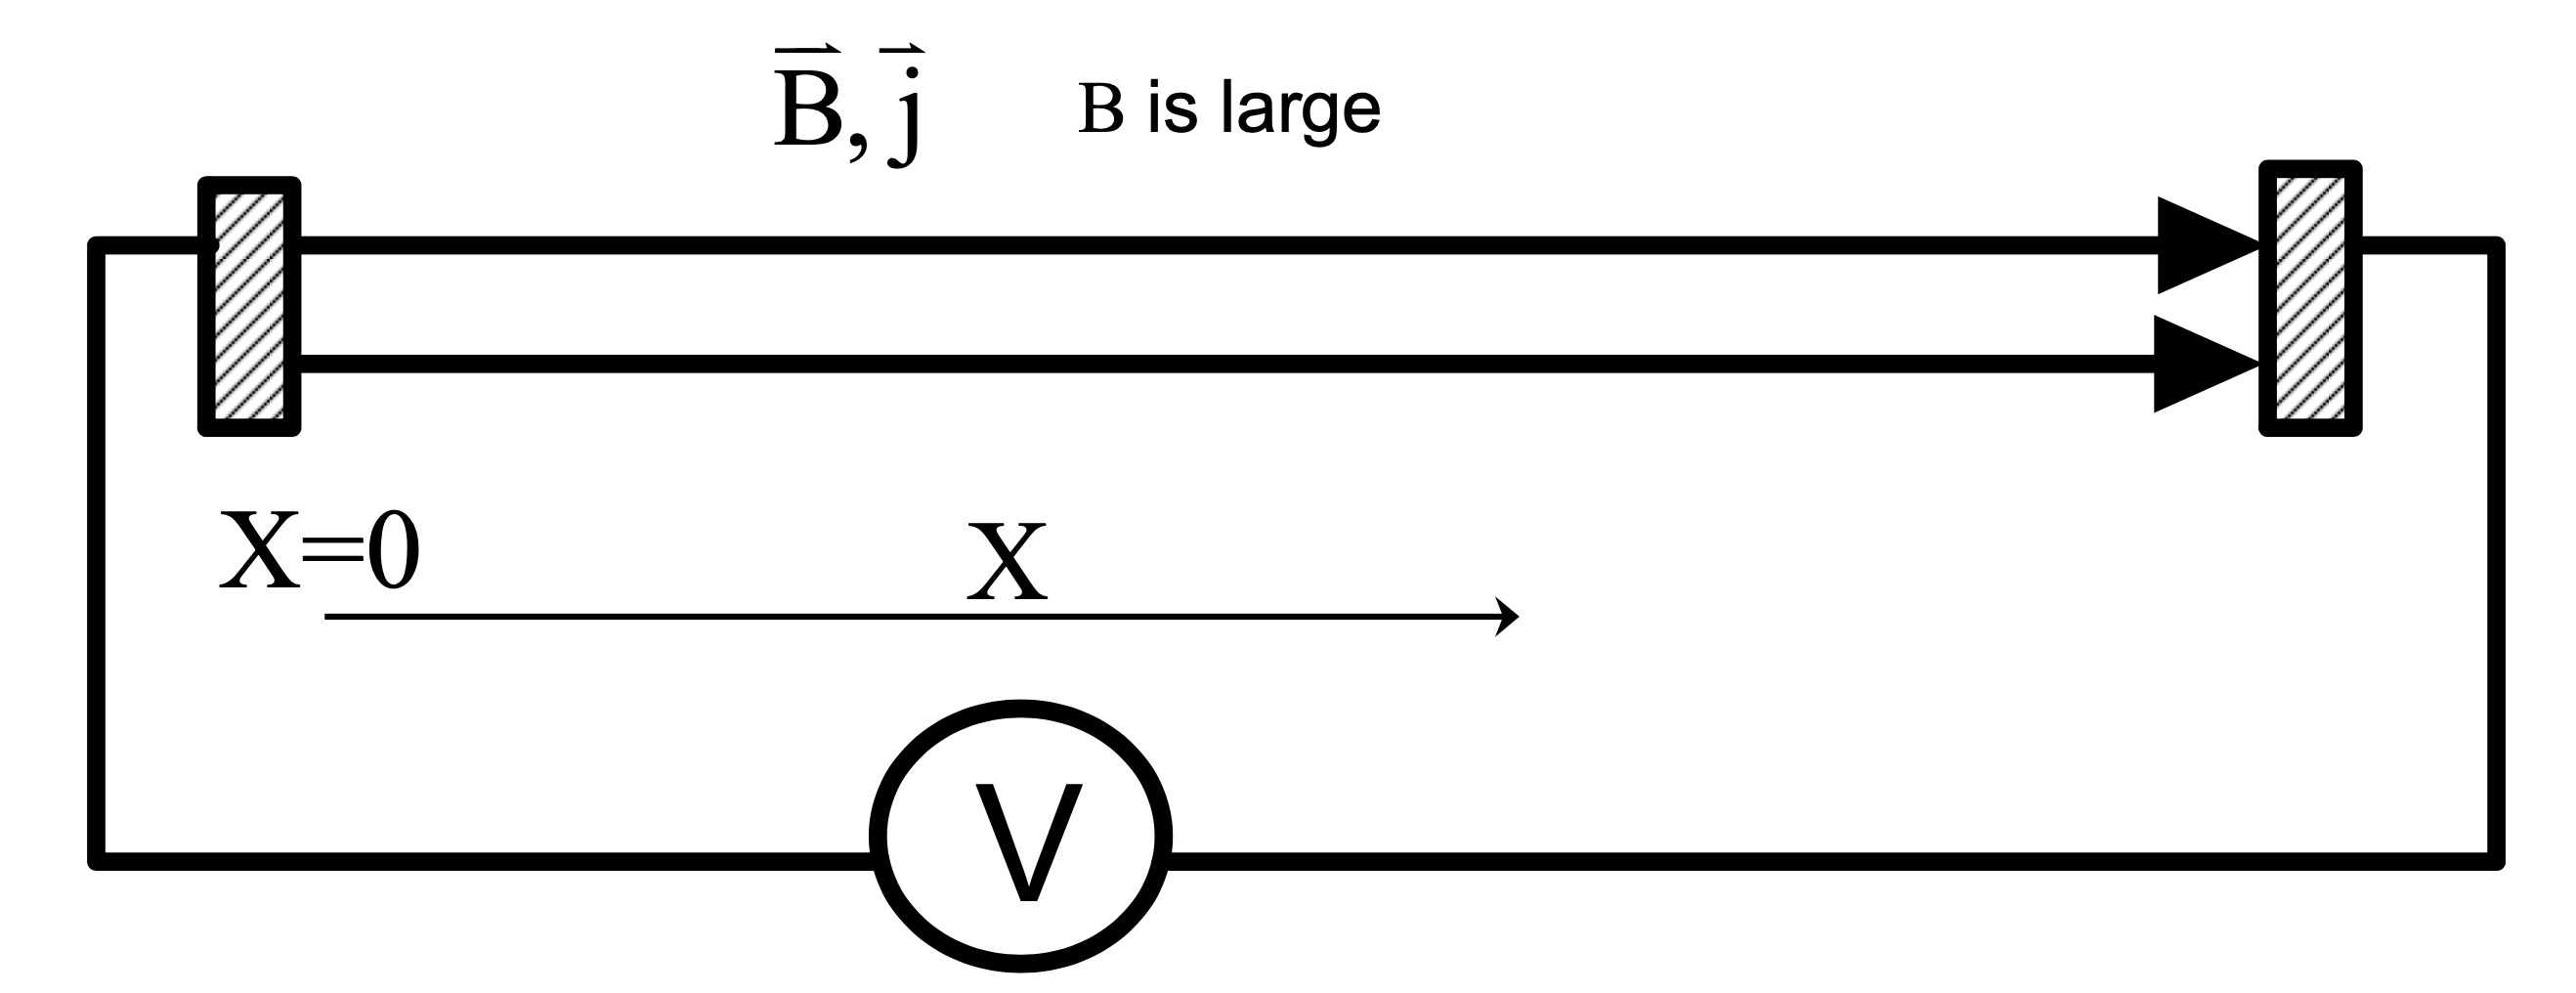 Figure 11.4